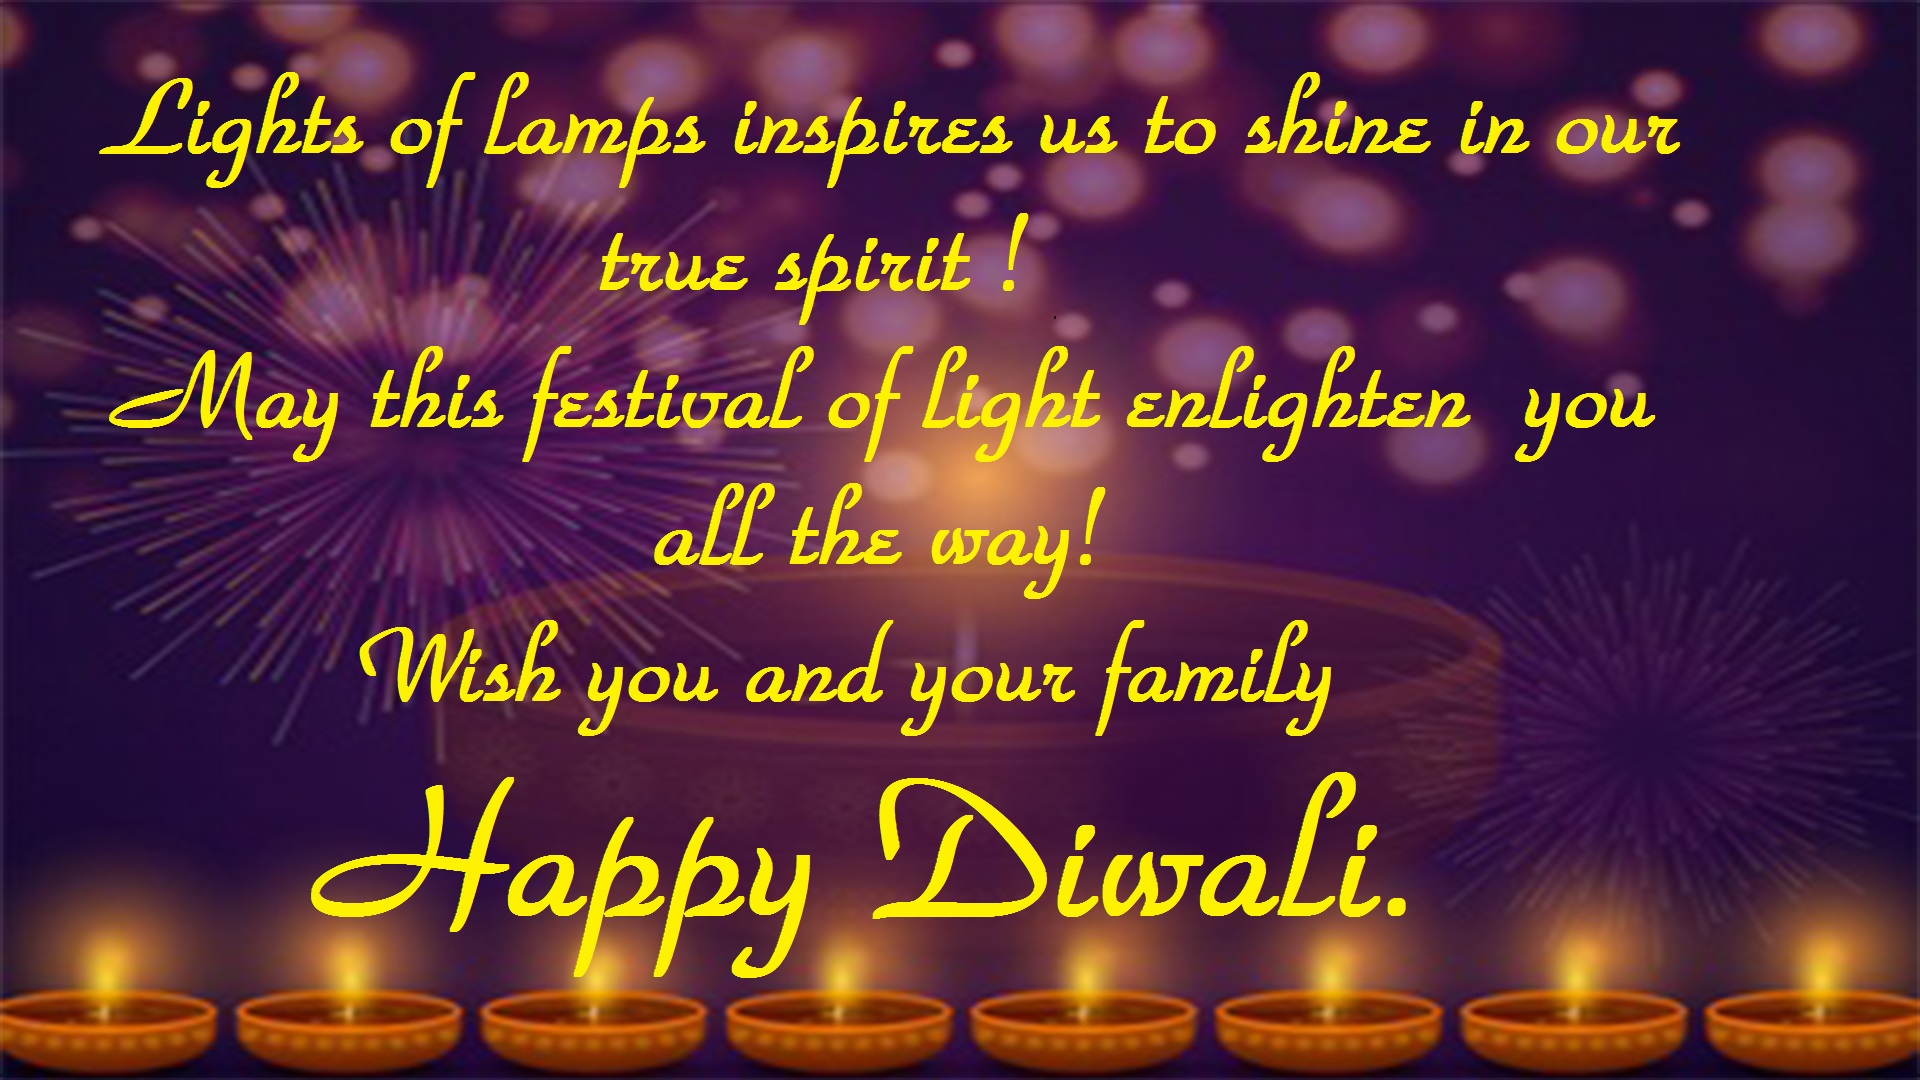 greeting card for diwali 2017 image